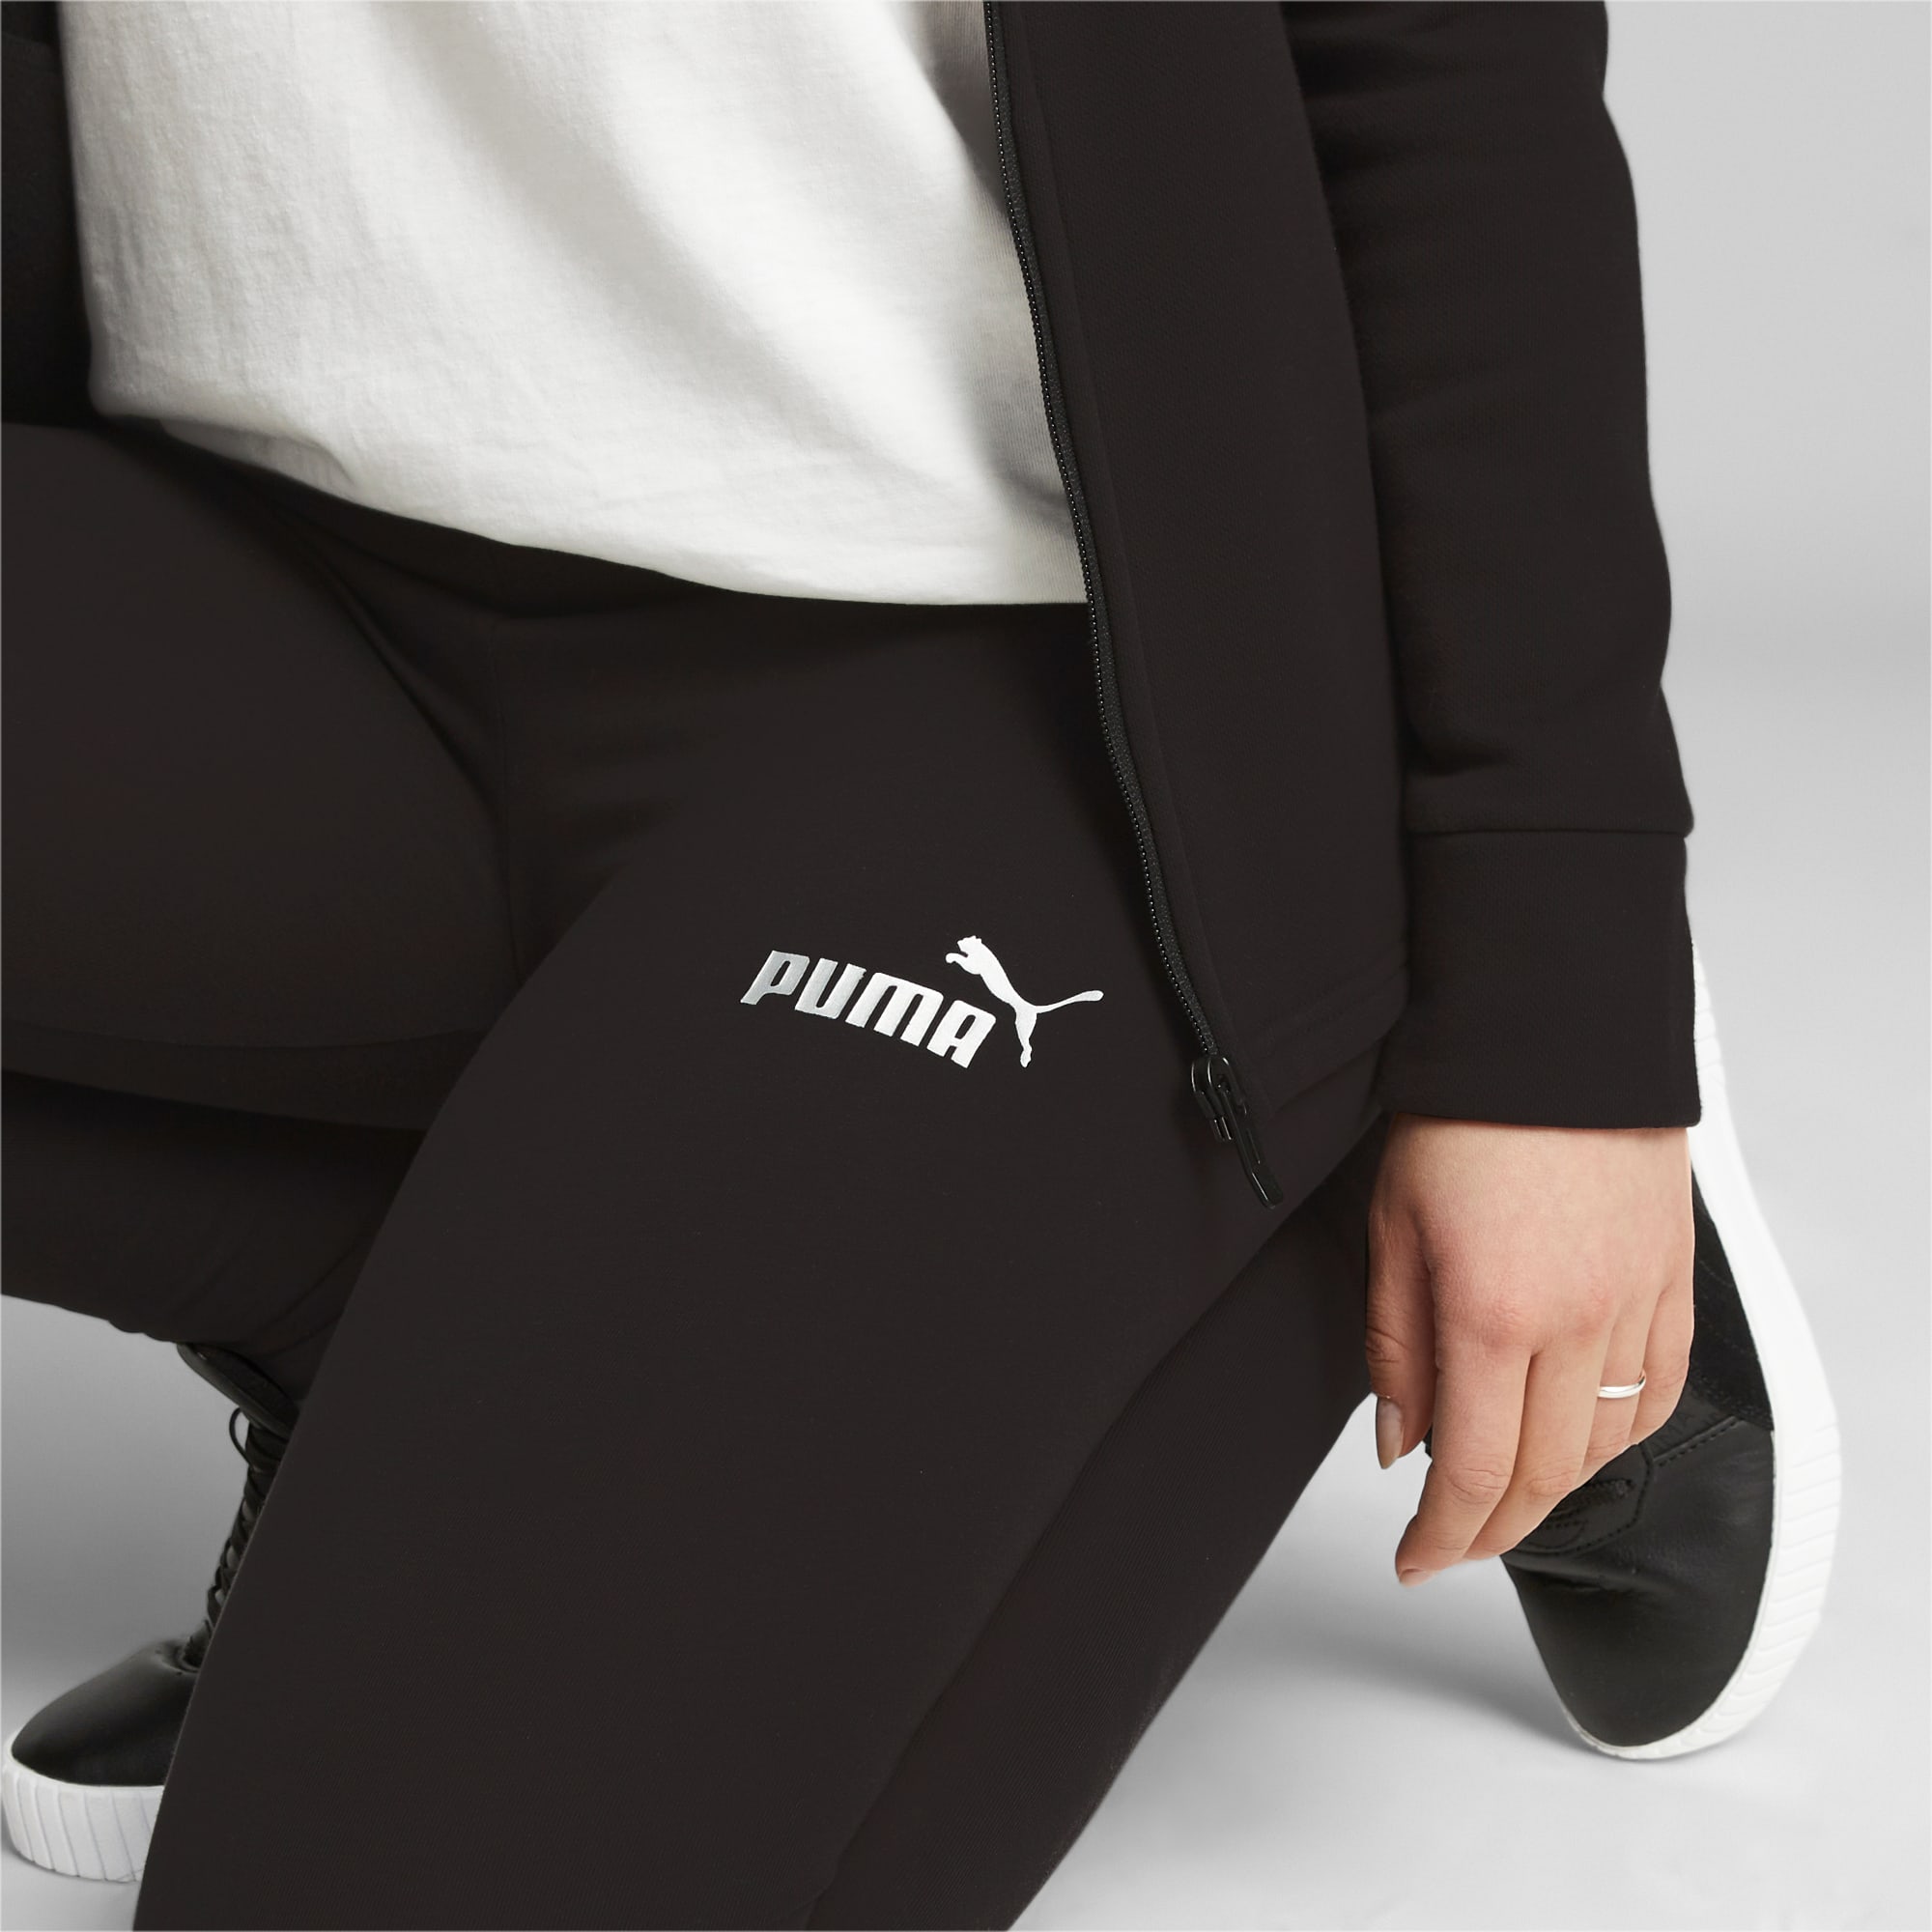 PUMA Women's Metallic Tracksuit, Black, Size M, Clothing